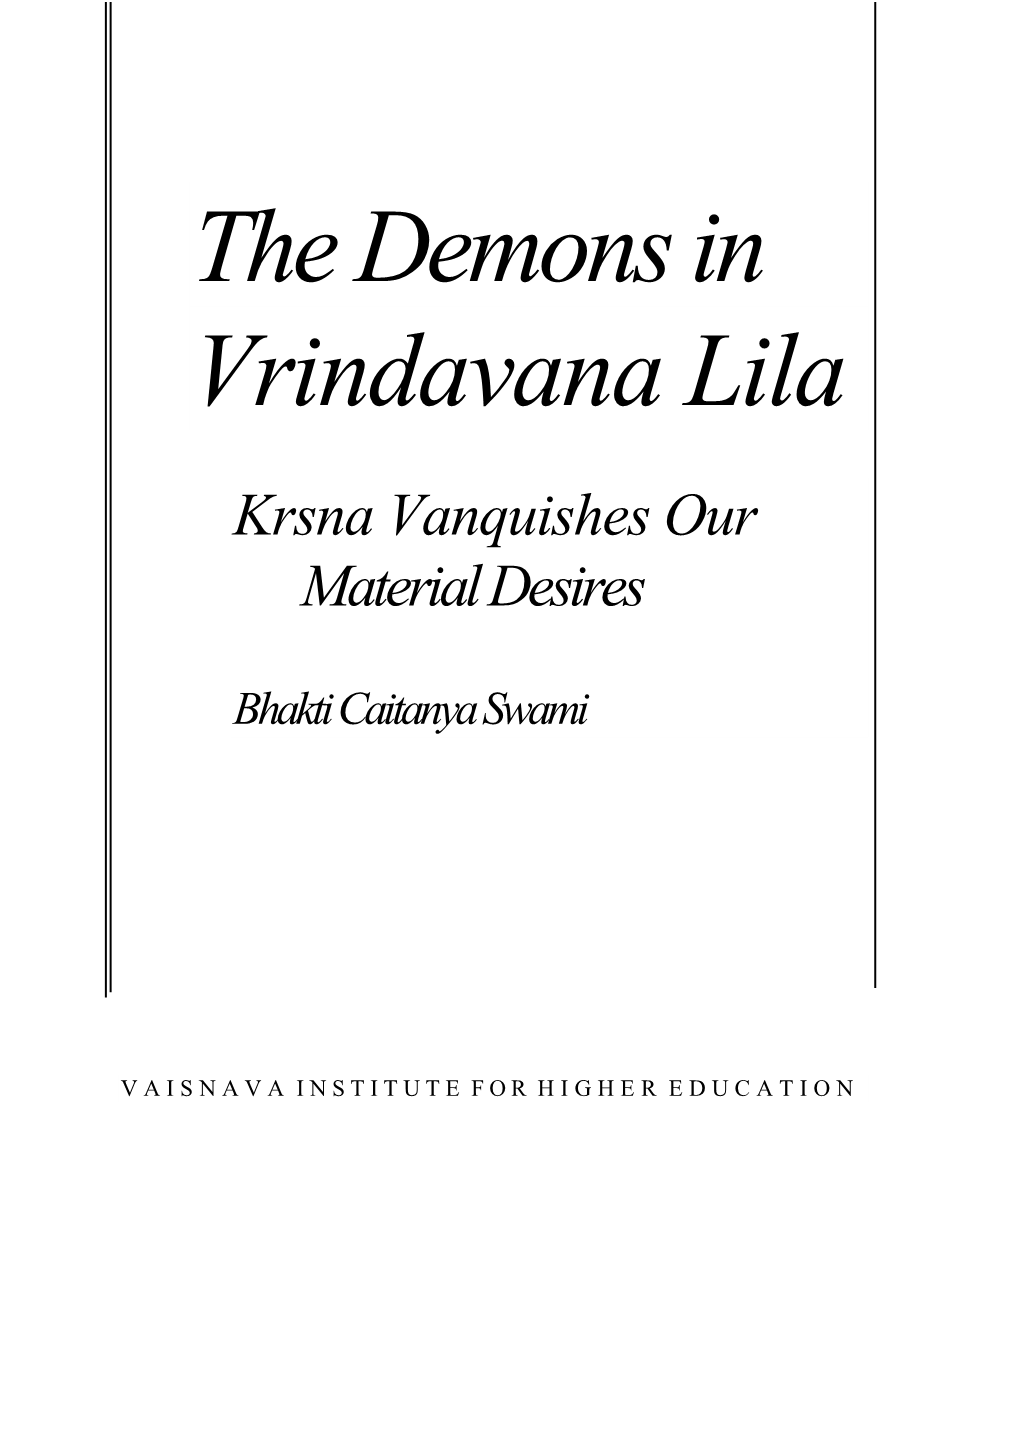 The Demons in Vrindavana Lila